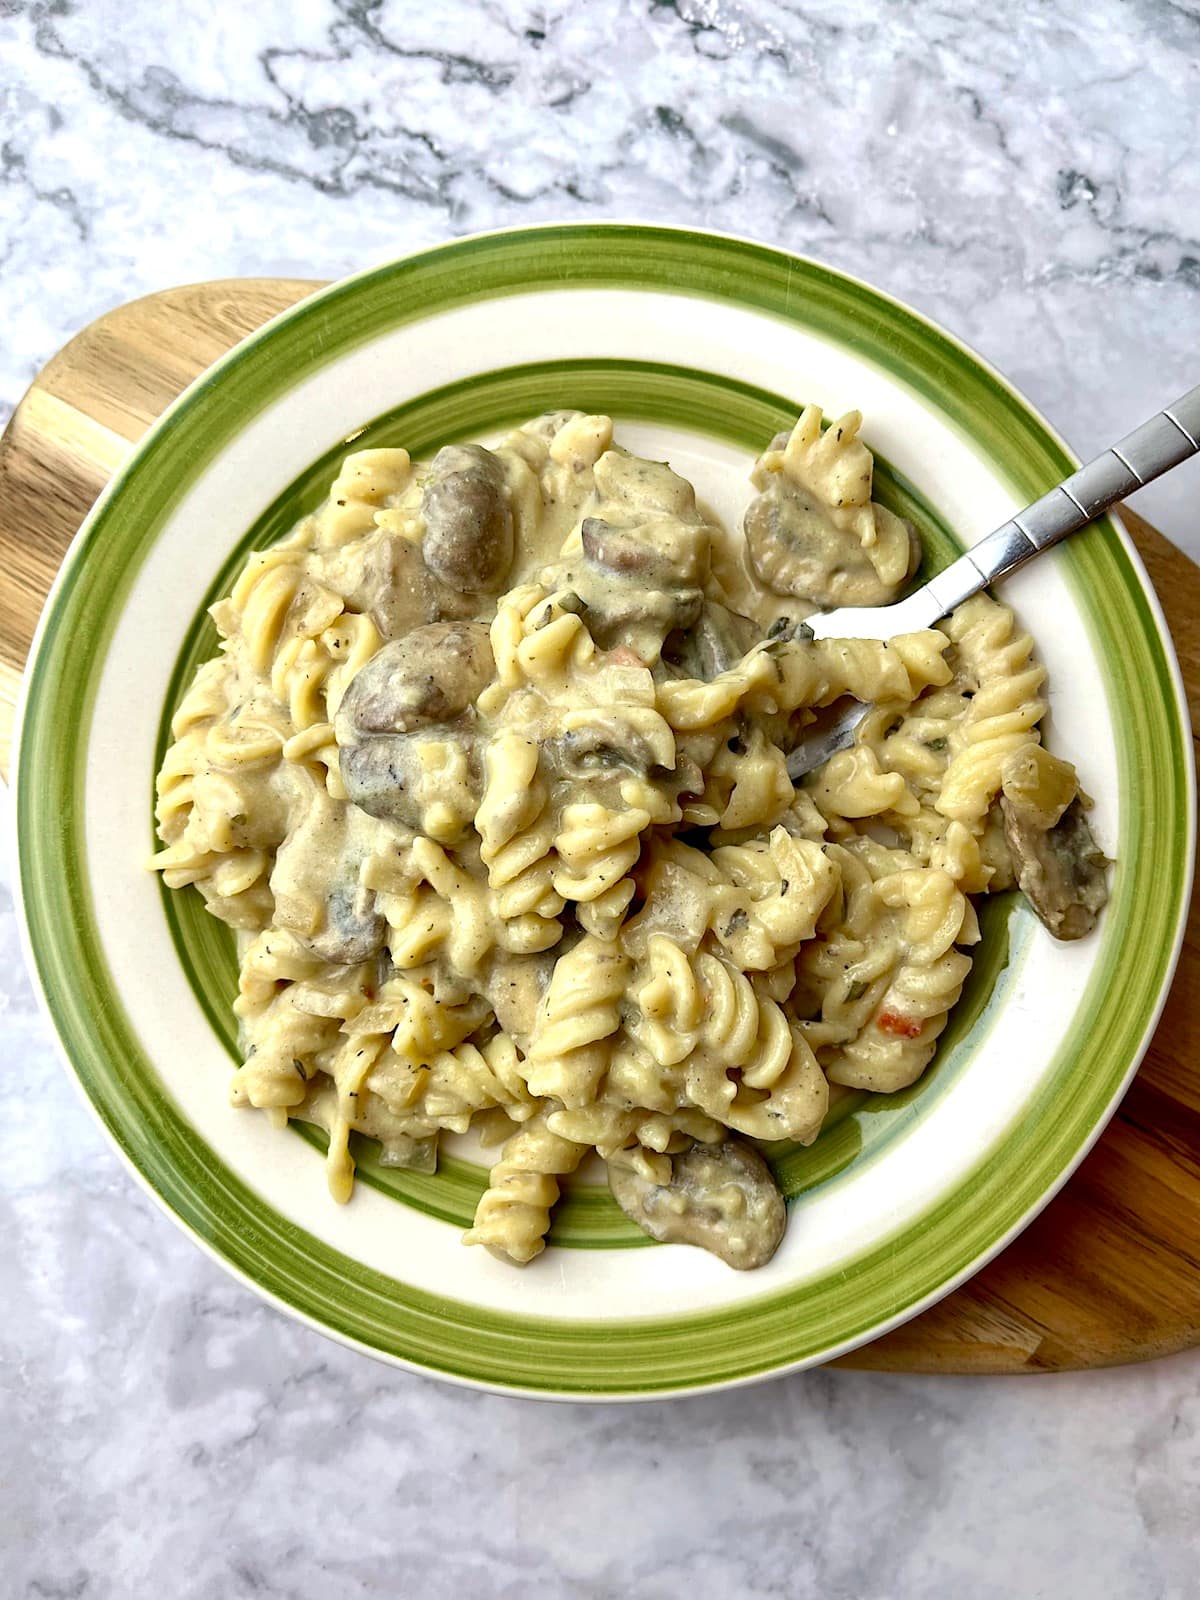 A plate of vegan mushroom stroganoff with fusilli pasta.